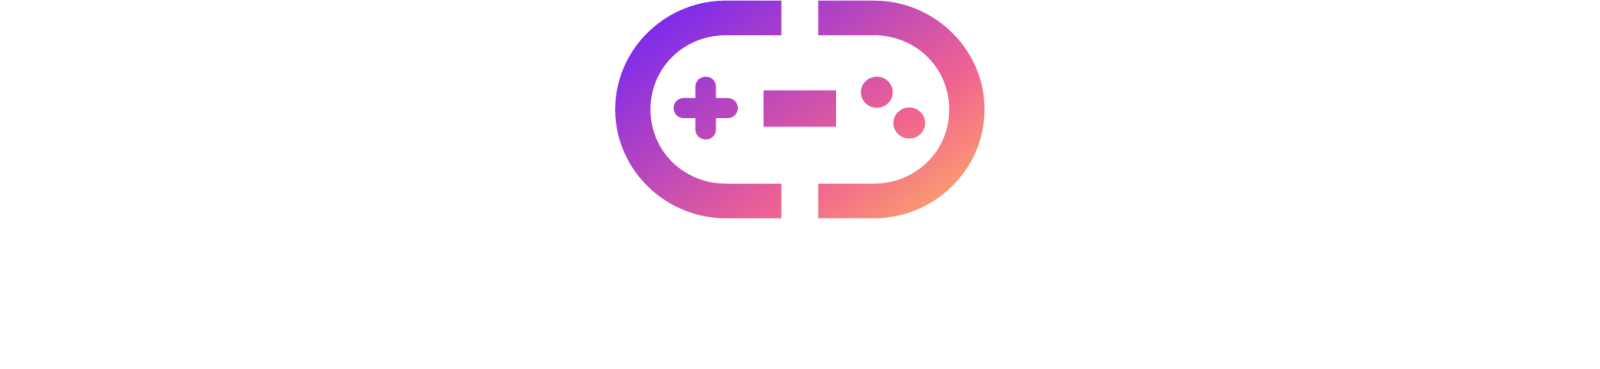 Plink - Official Logo - White